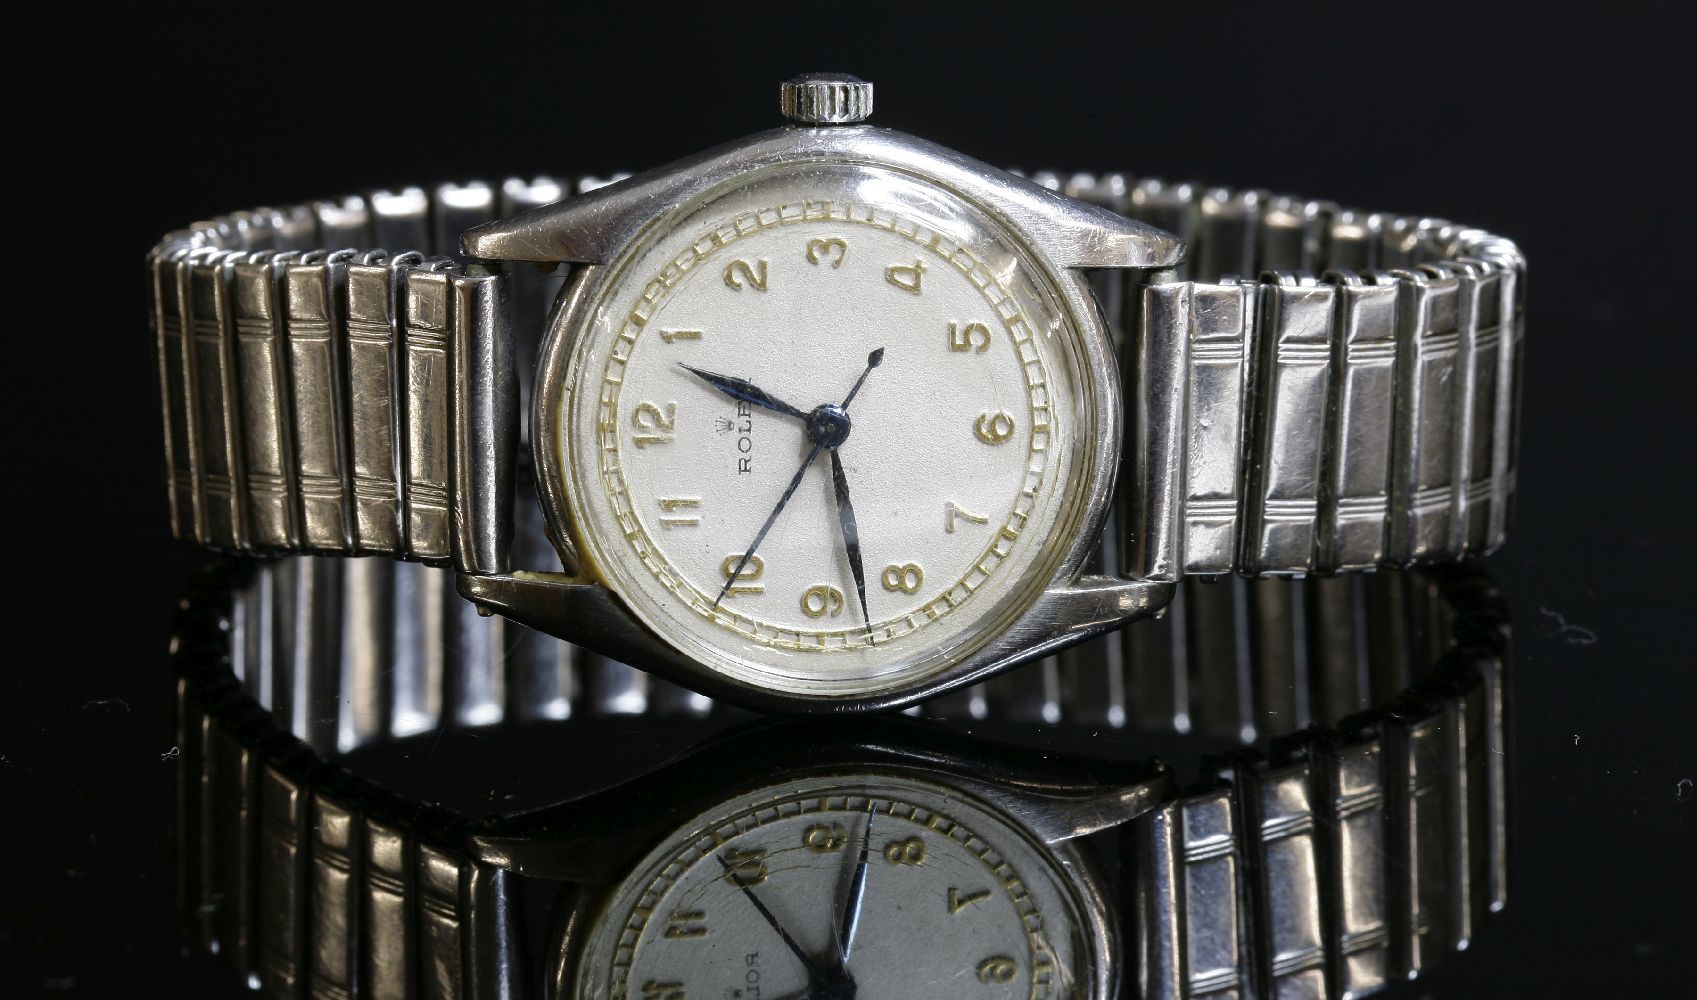 A gentlemen's stainless steel Rolex mechanical watch, c.1926, model no. 2285, a circular ivory-